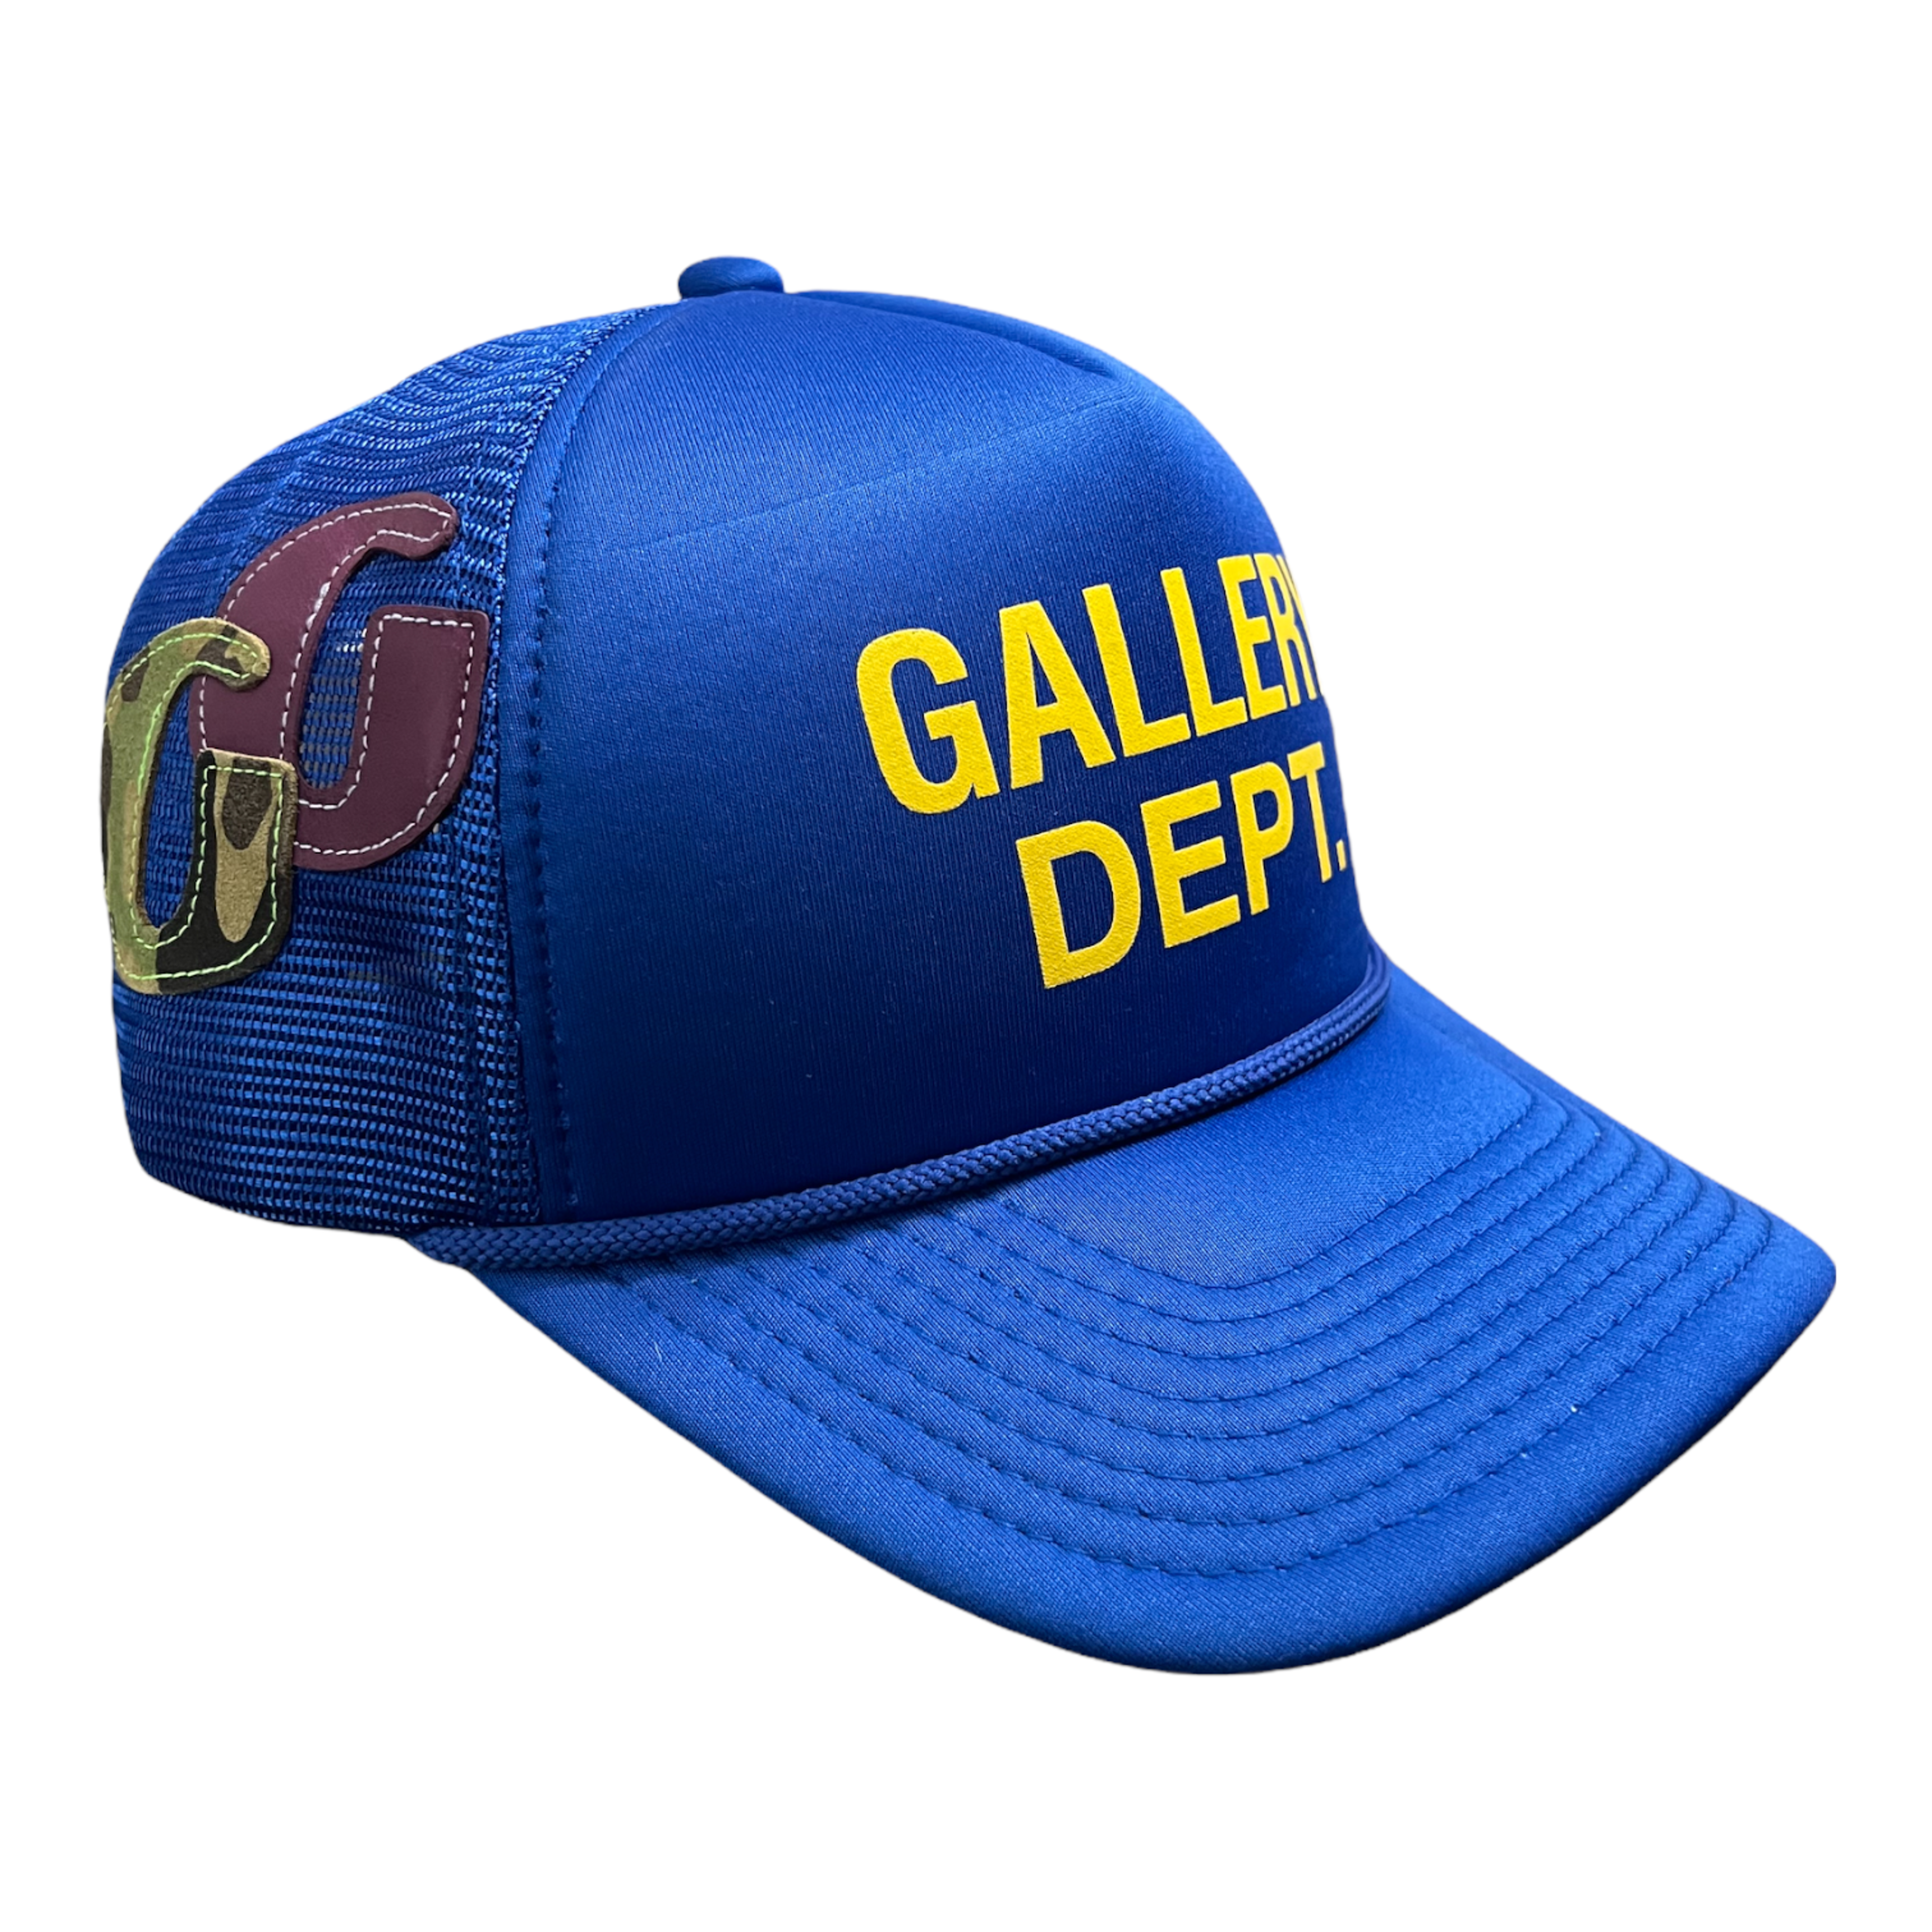 Gallery Department Logo Trucker Hat Blue Yellow (4 G Patch Custo